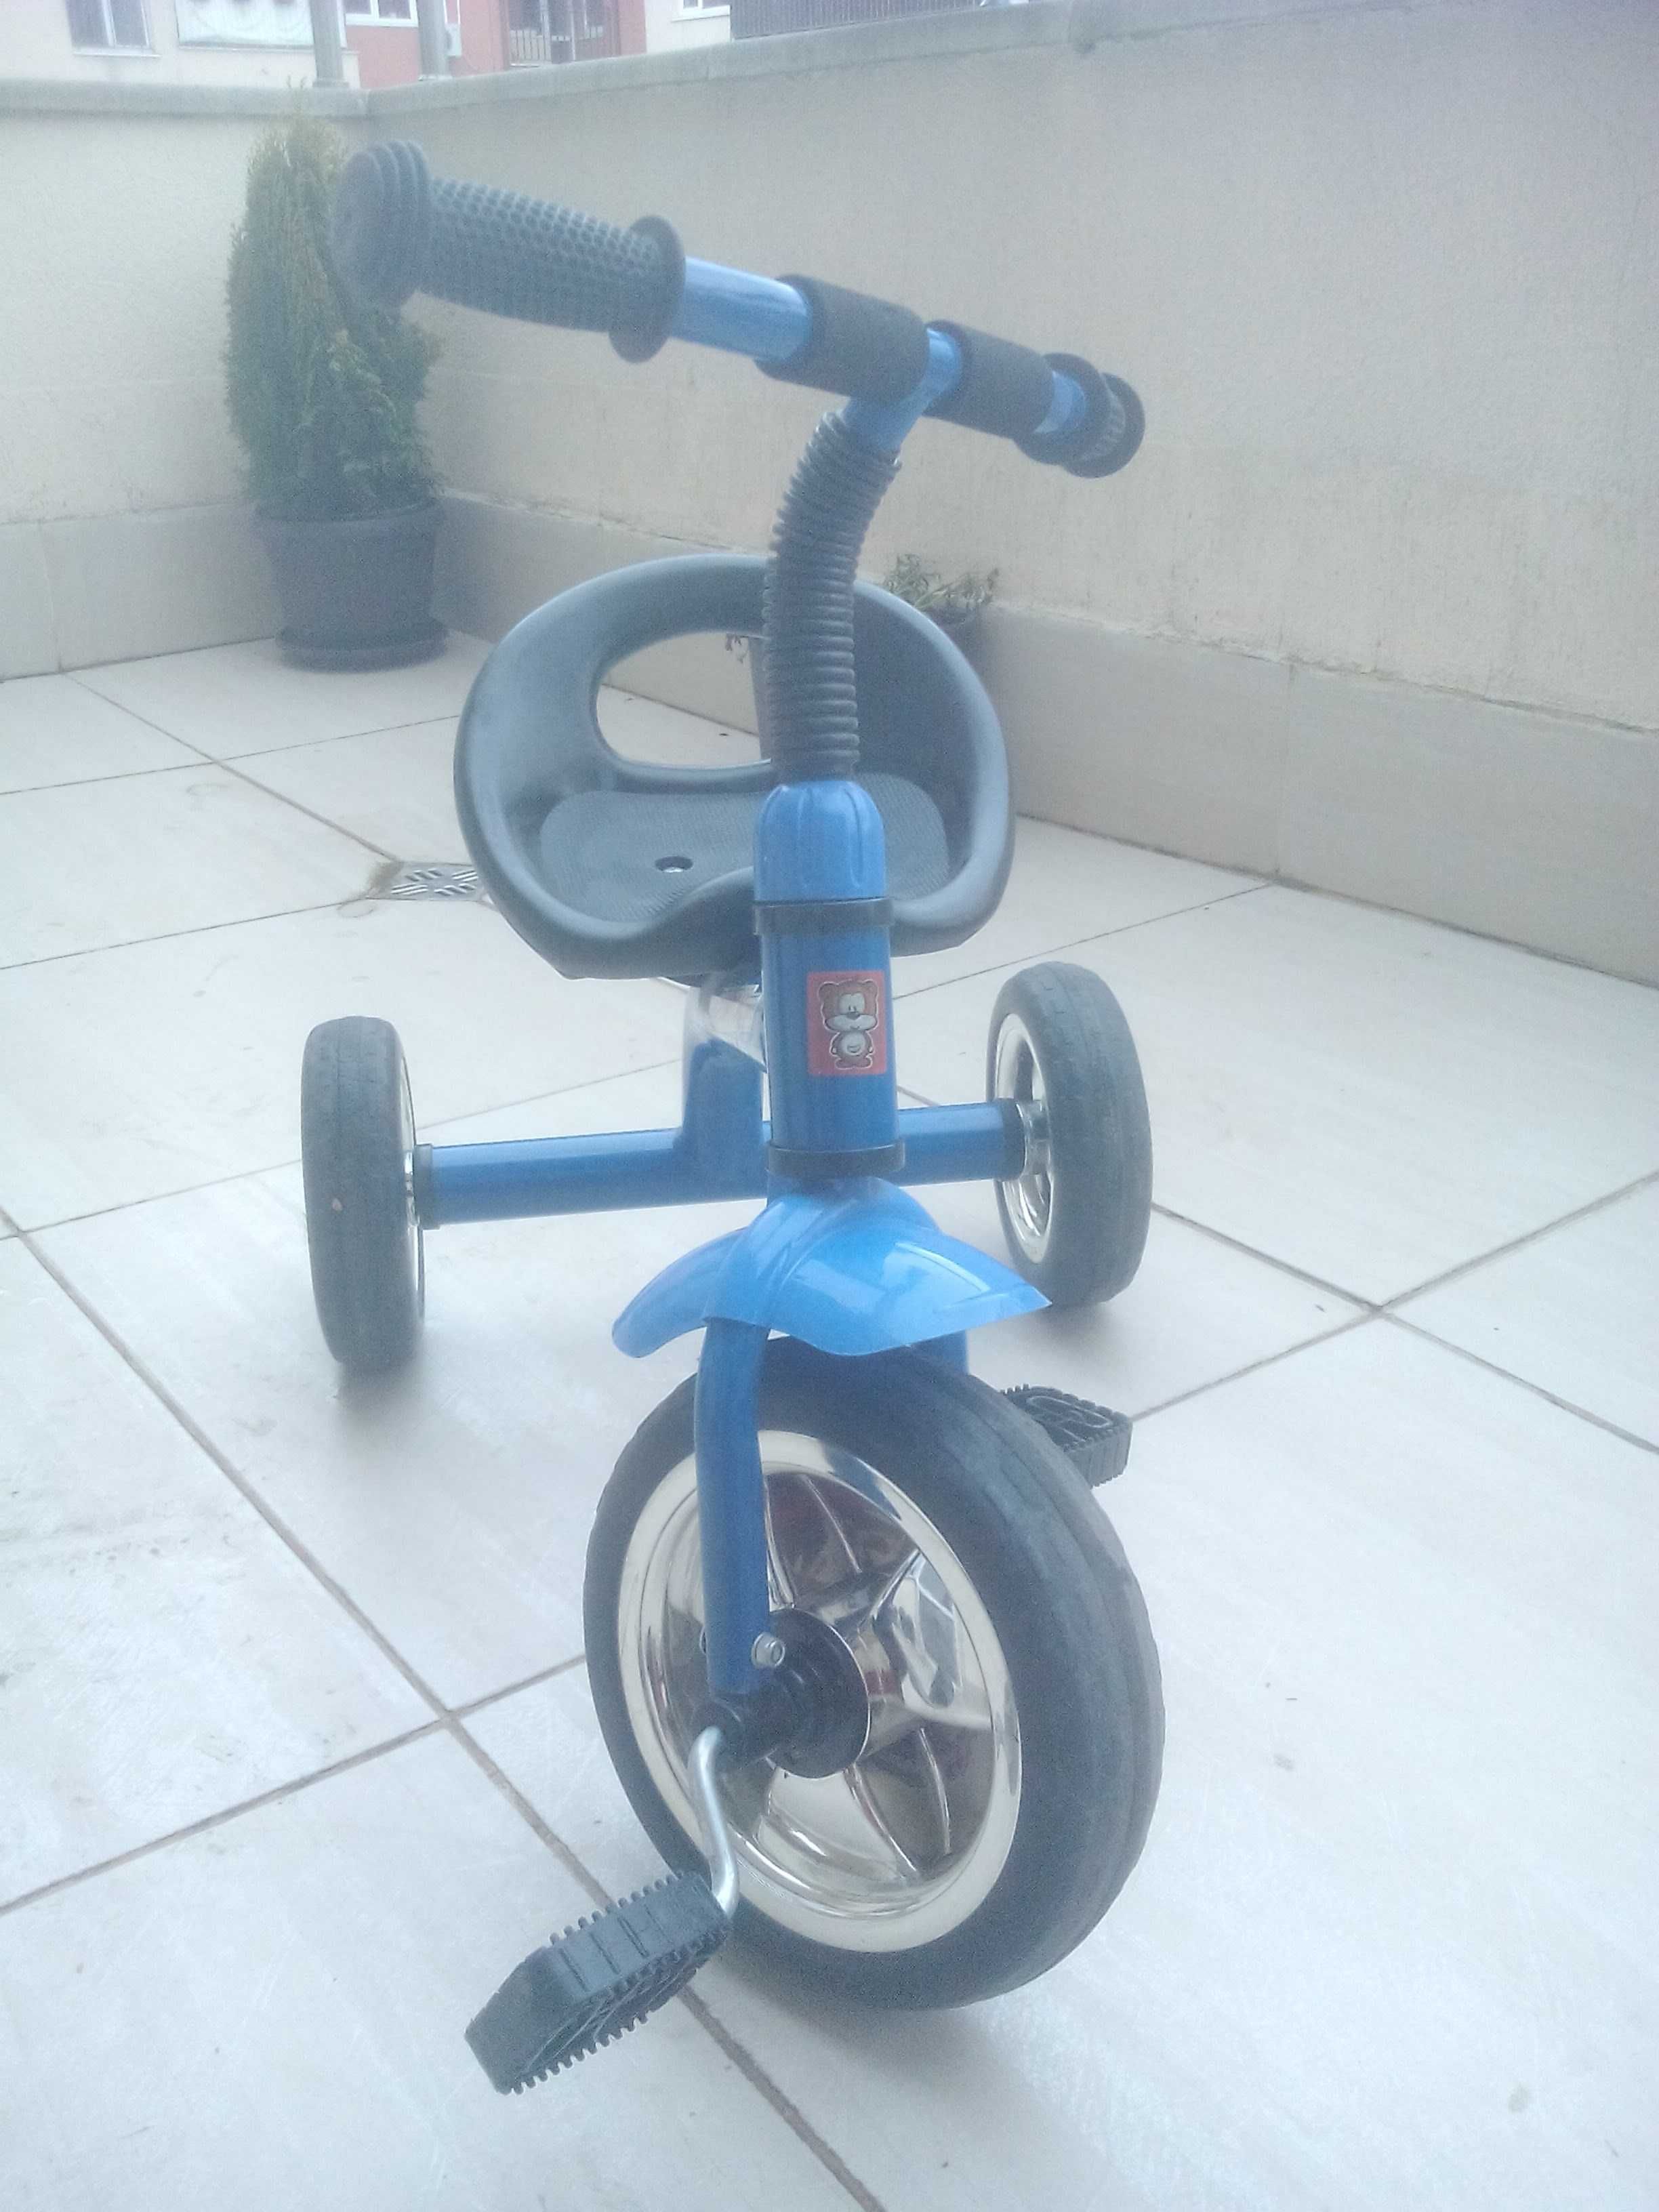 Детска триколка Bertoni Trike